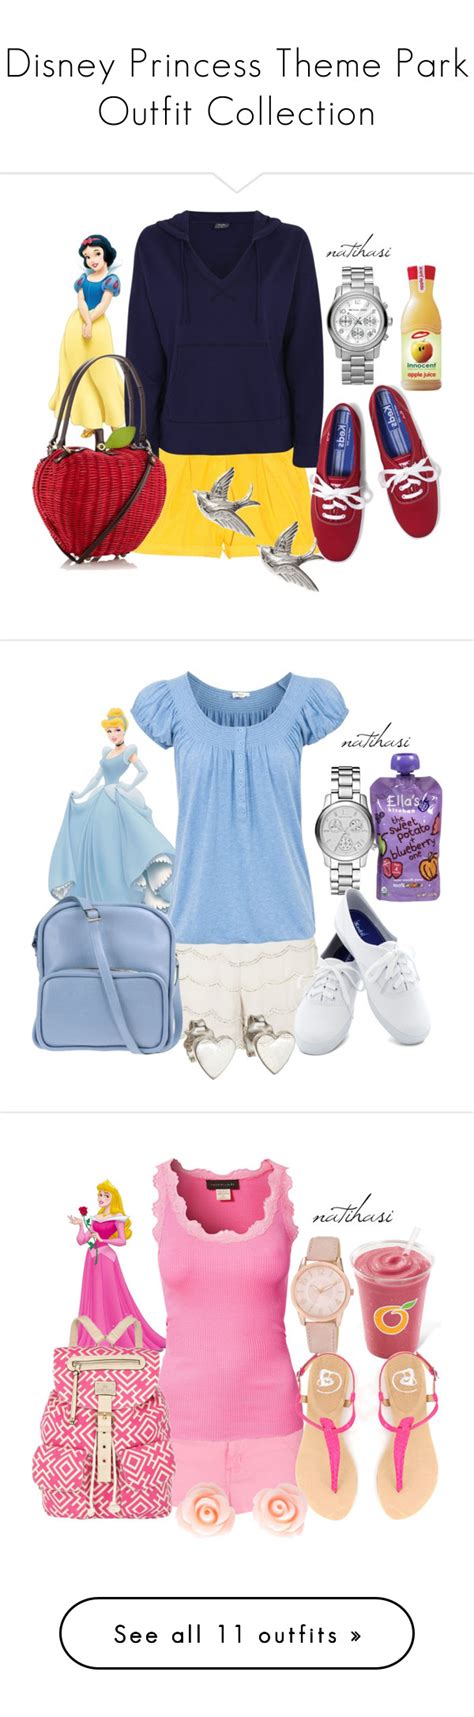 Disney Princess Theme Park Outfit Collection